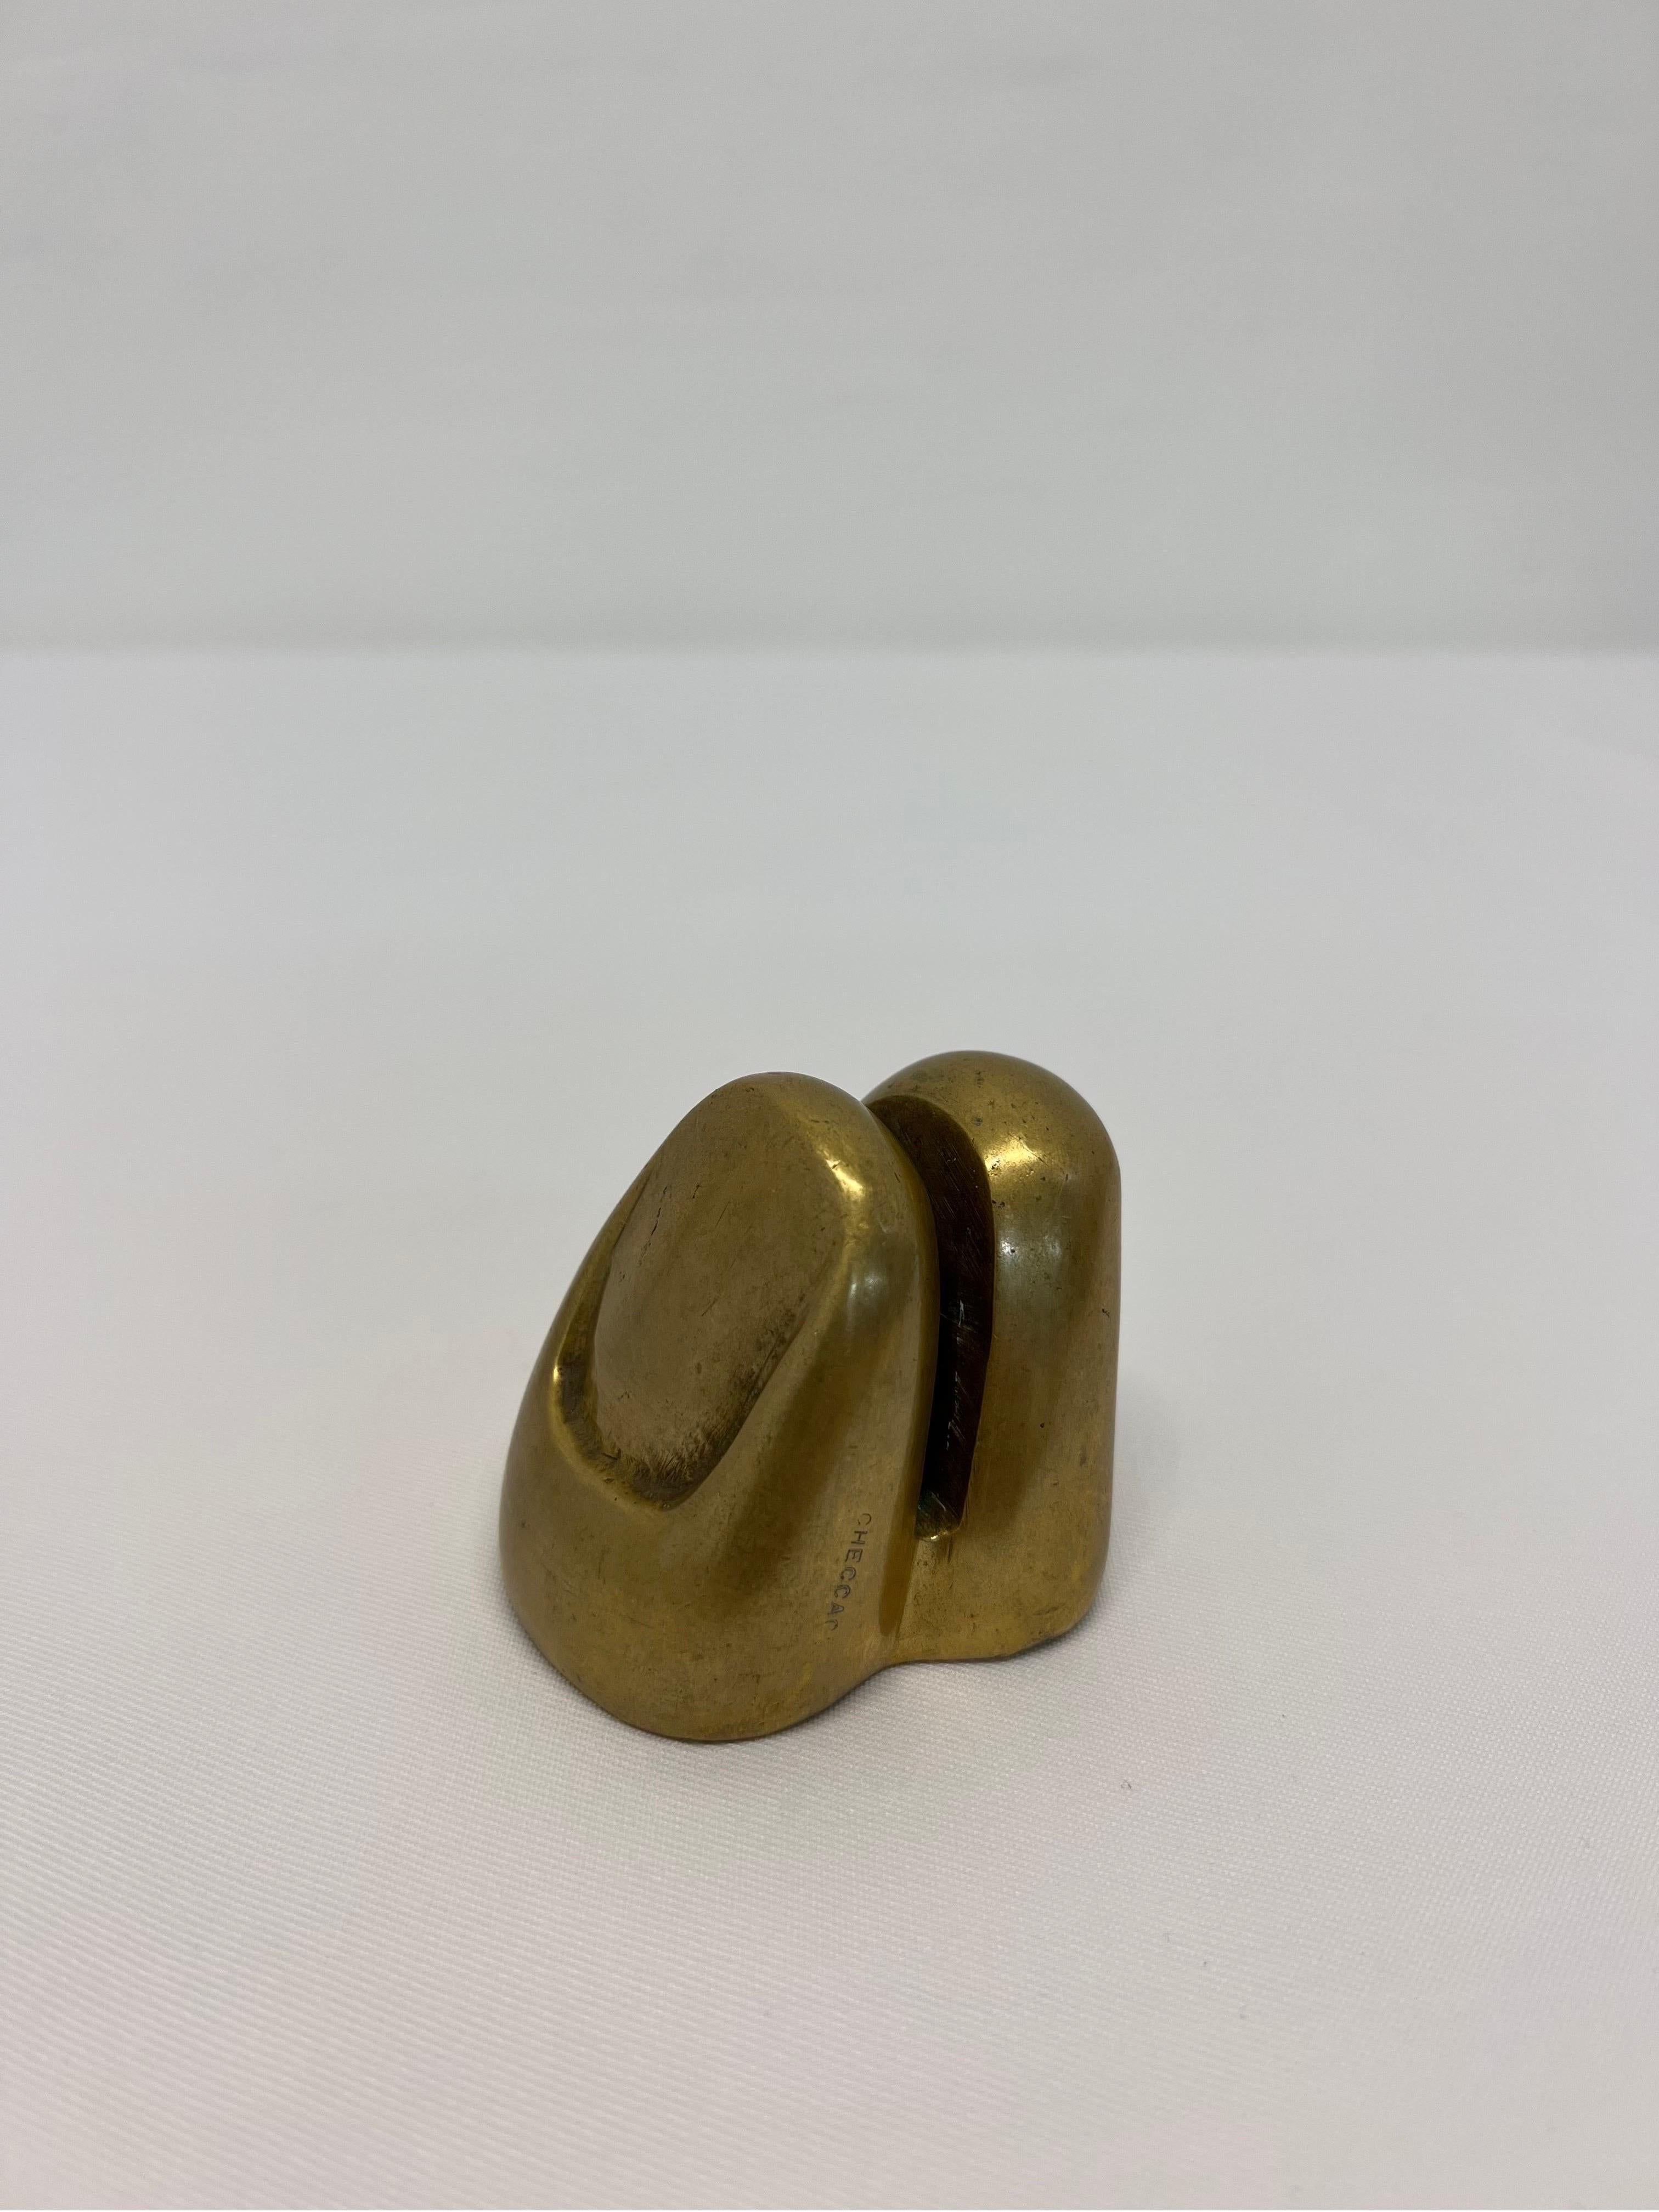 Brazilian mid-century modern bronze paperweight toe sculpture by Italian-Brazilian sculptor Pietrina Checcacci, 1960s. Signed.